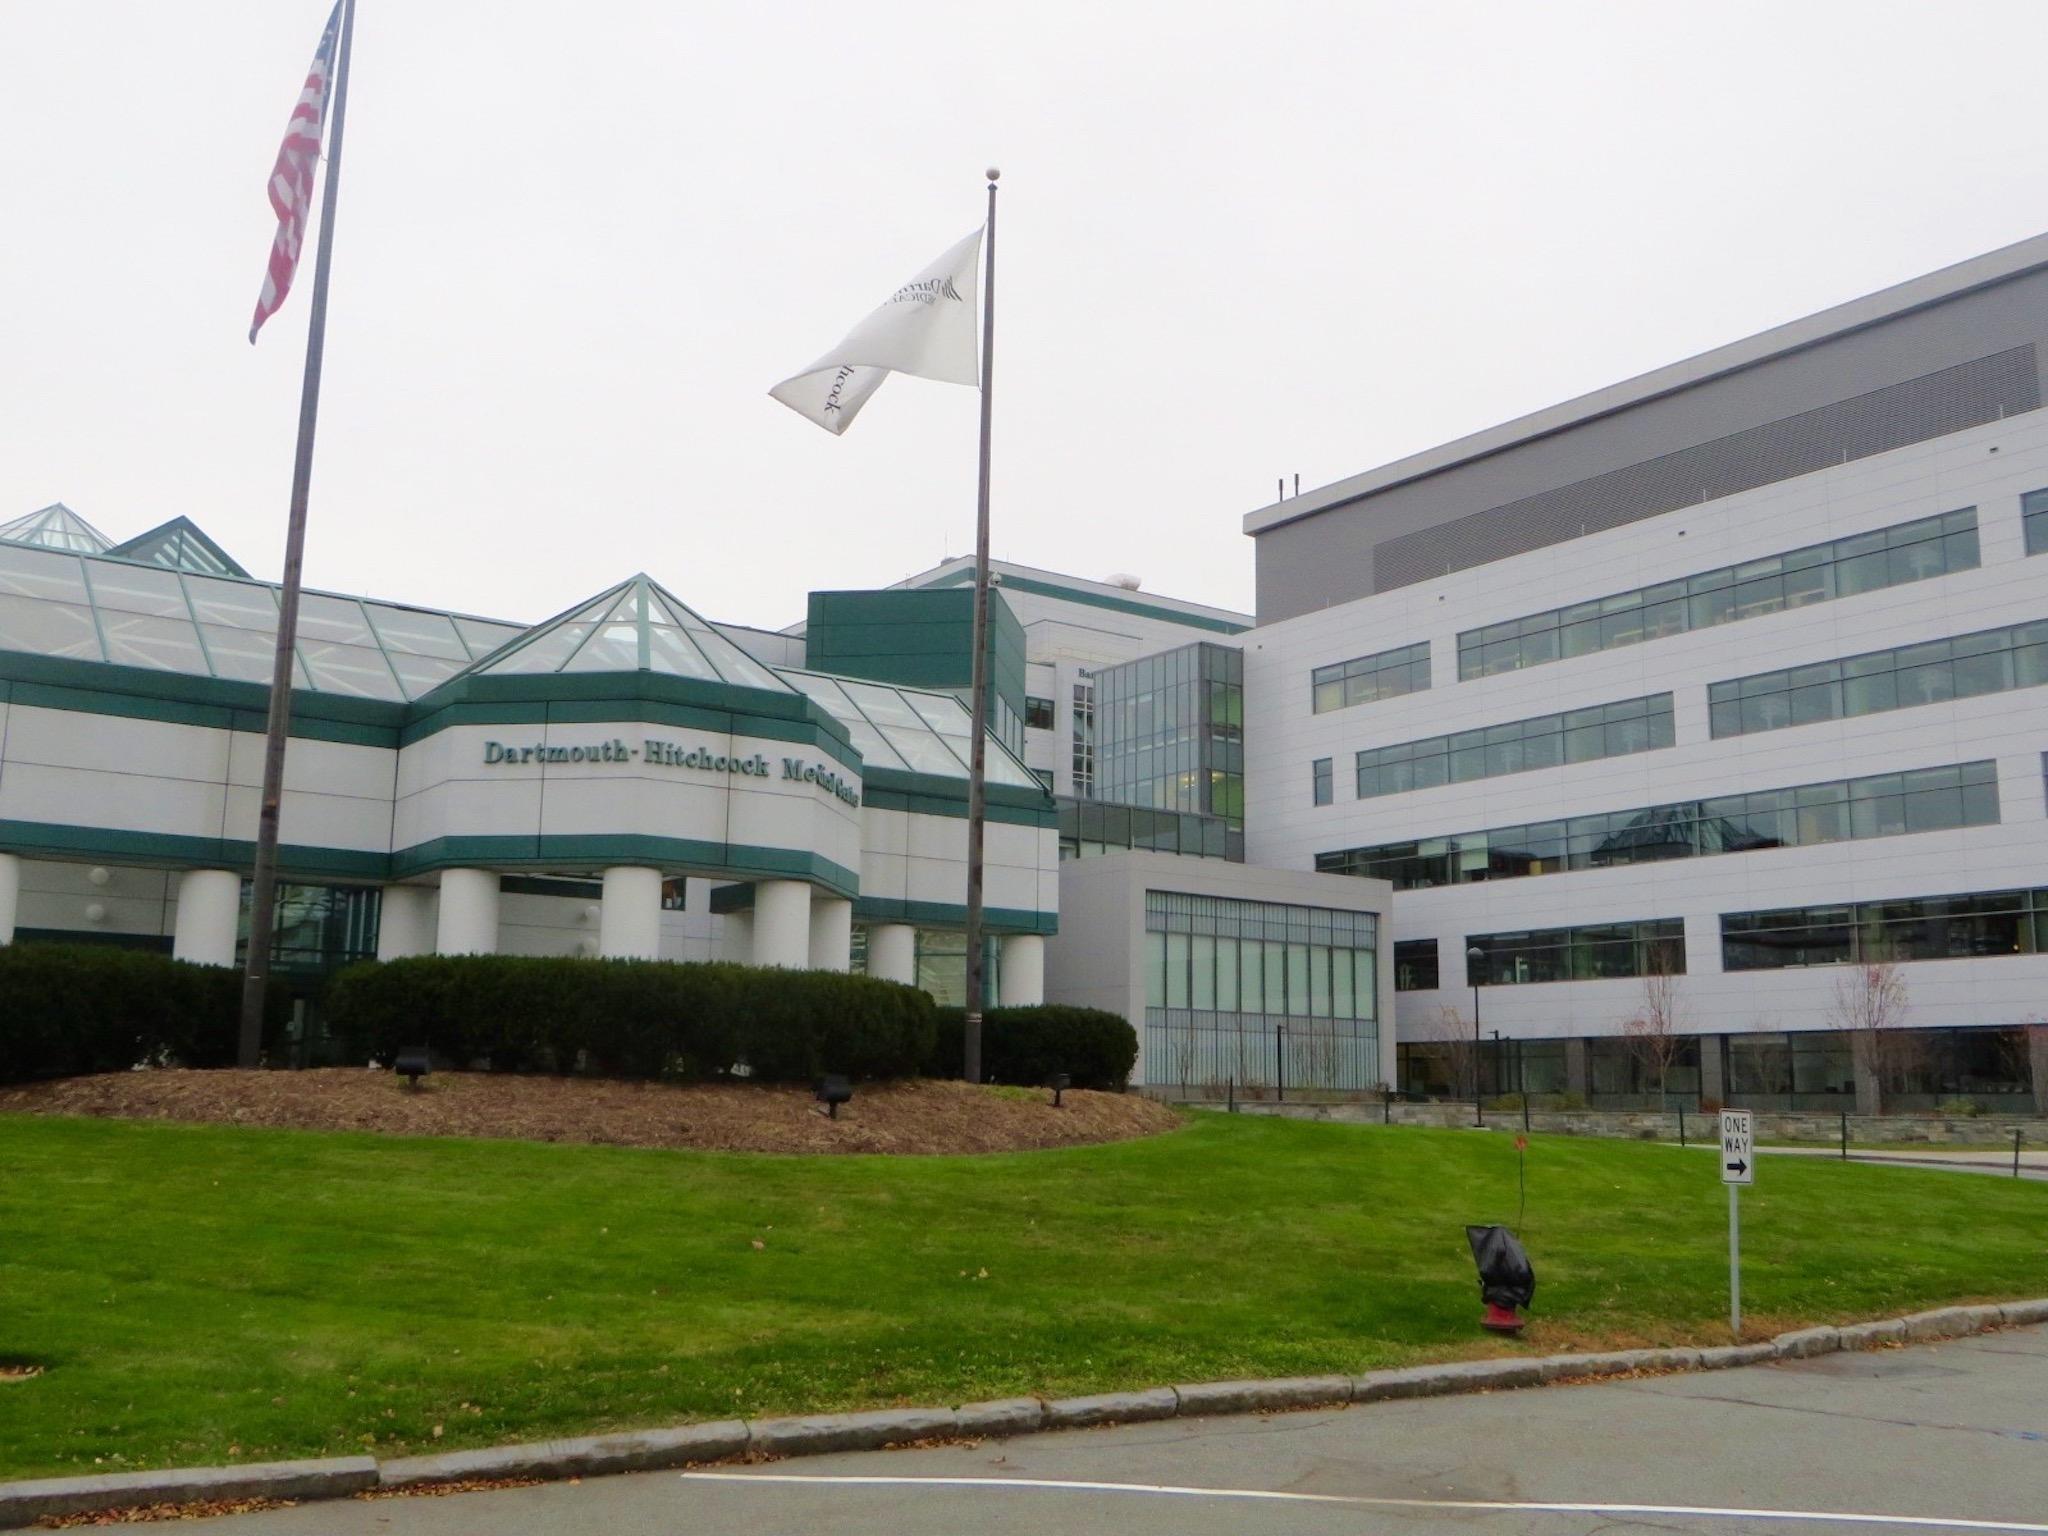 Dartmouth–Hitchcock Medical Center, New Hampshire